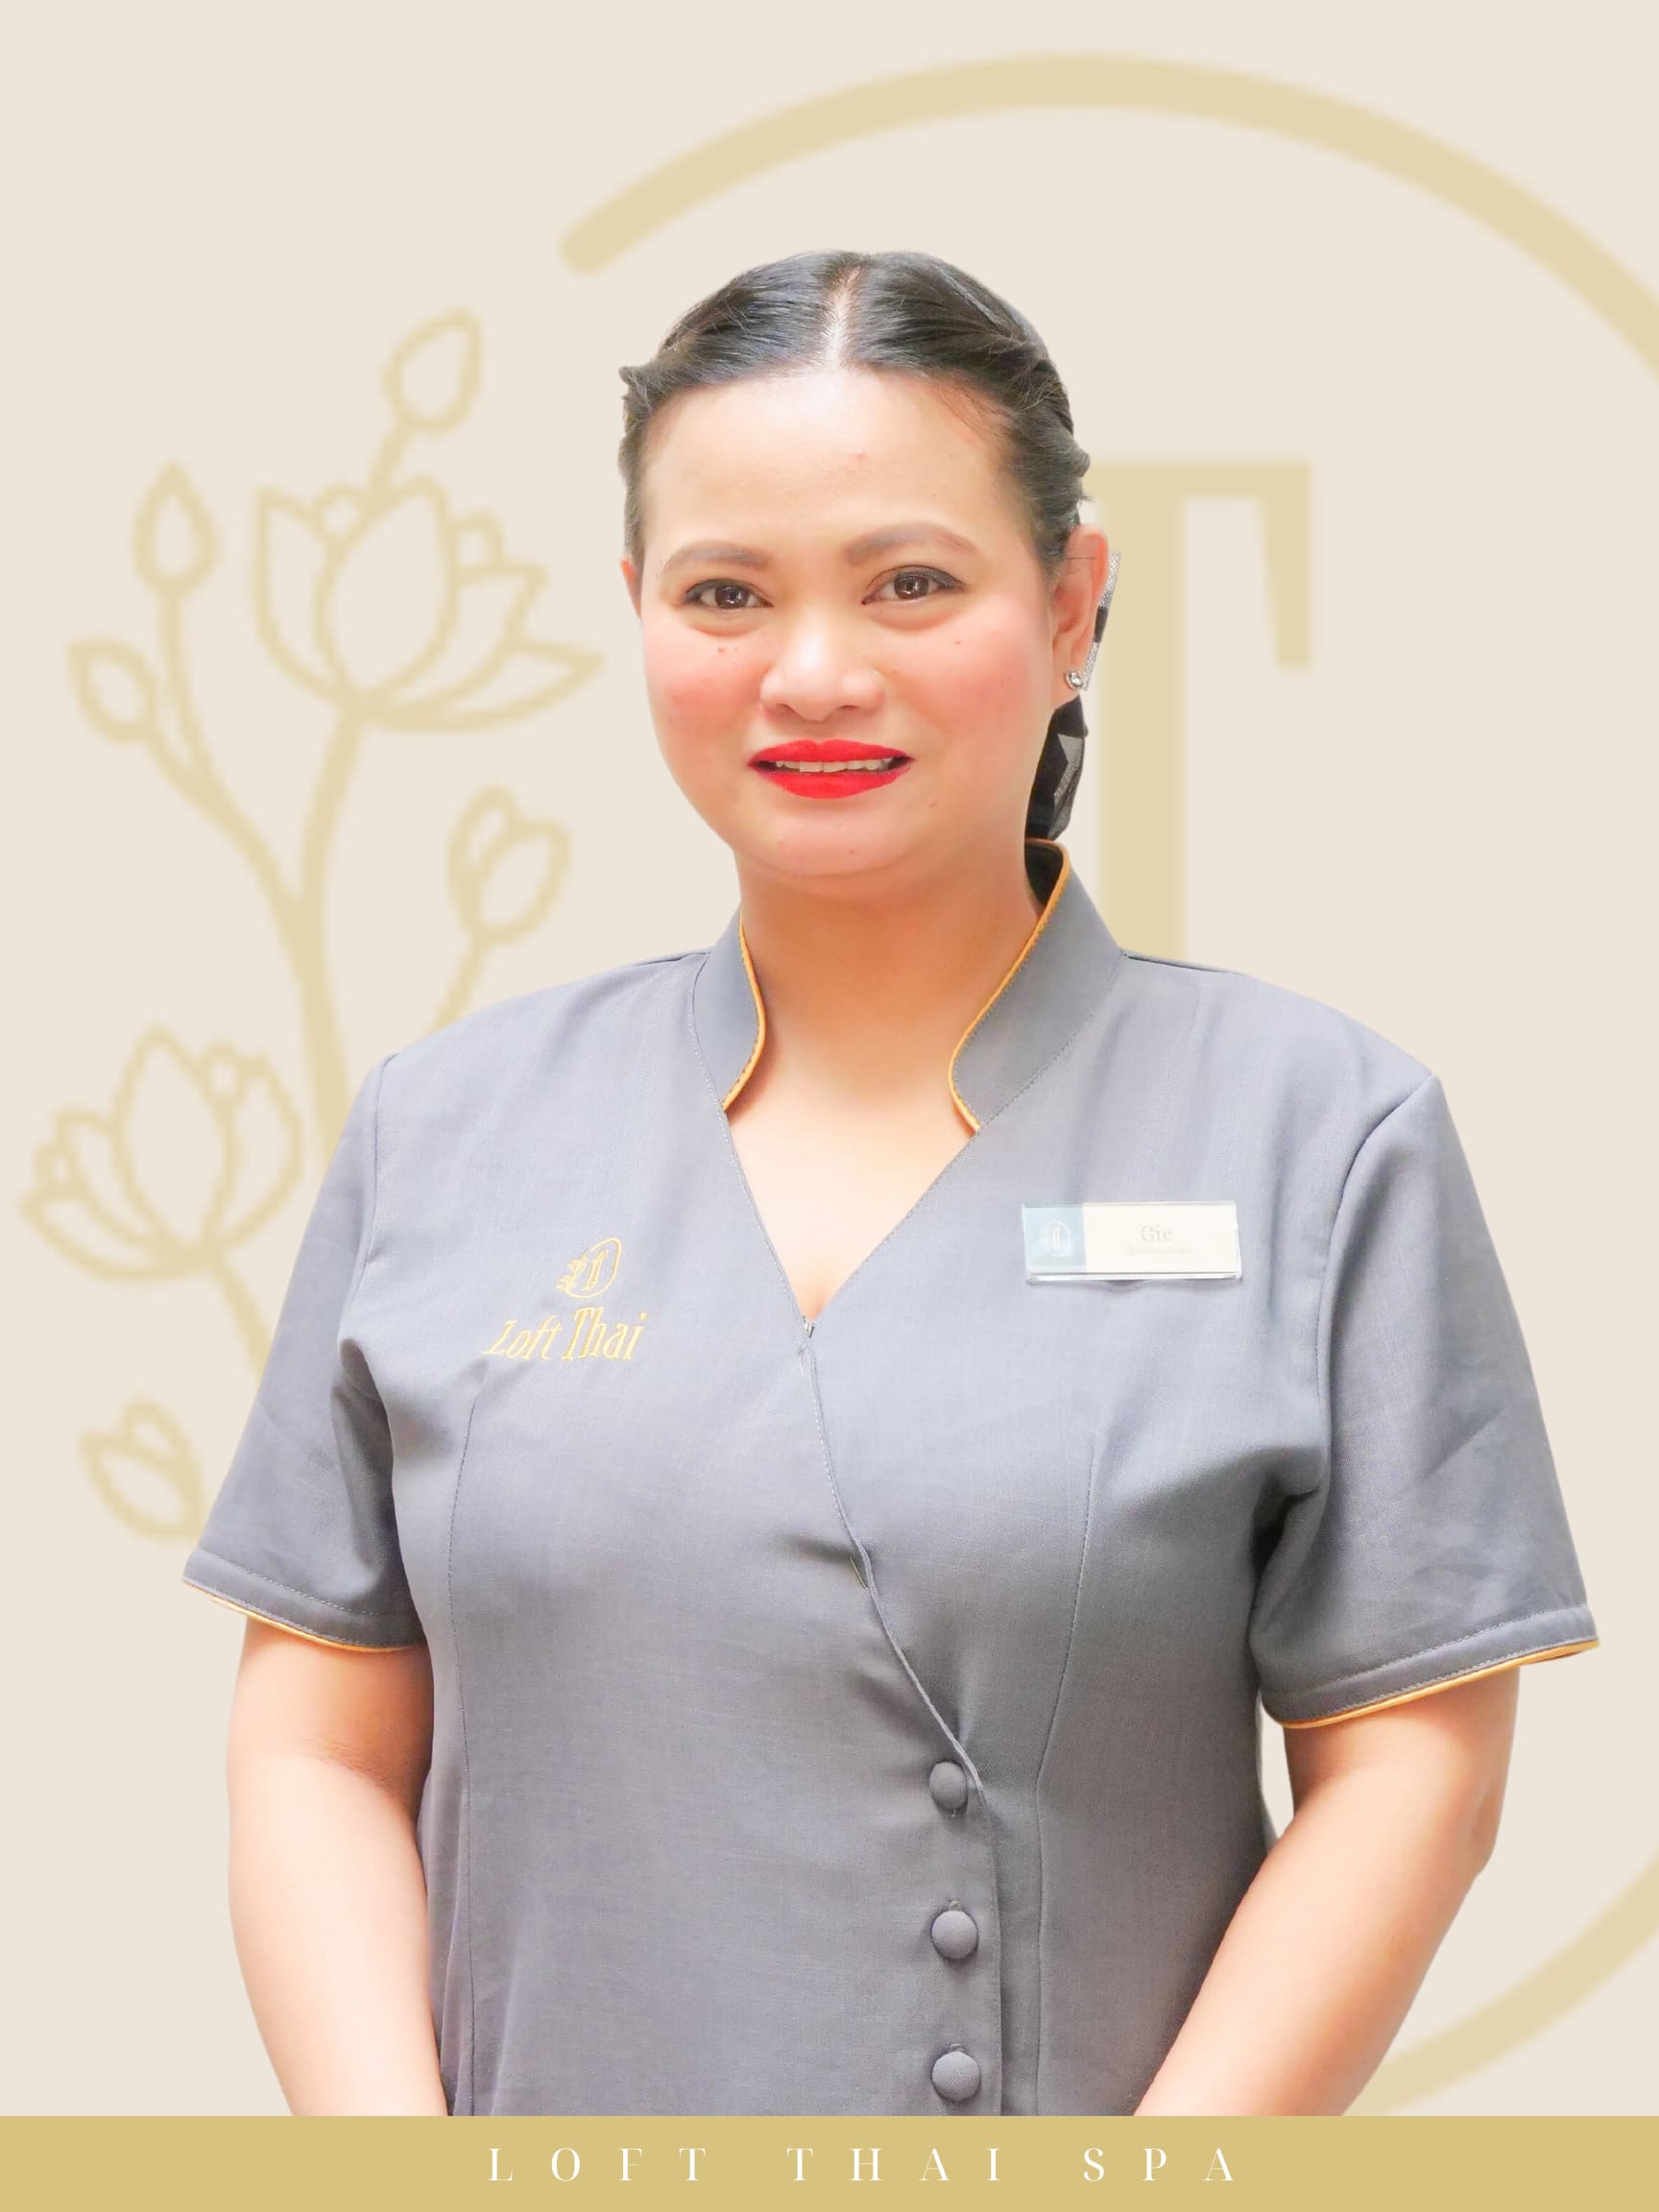 Best Spa Therapist in Bangkok